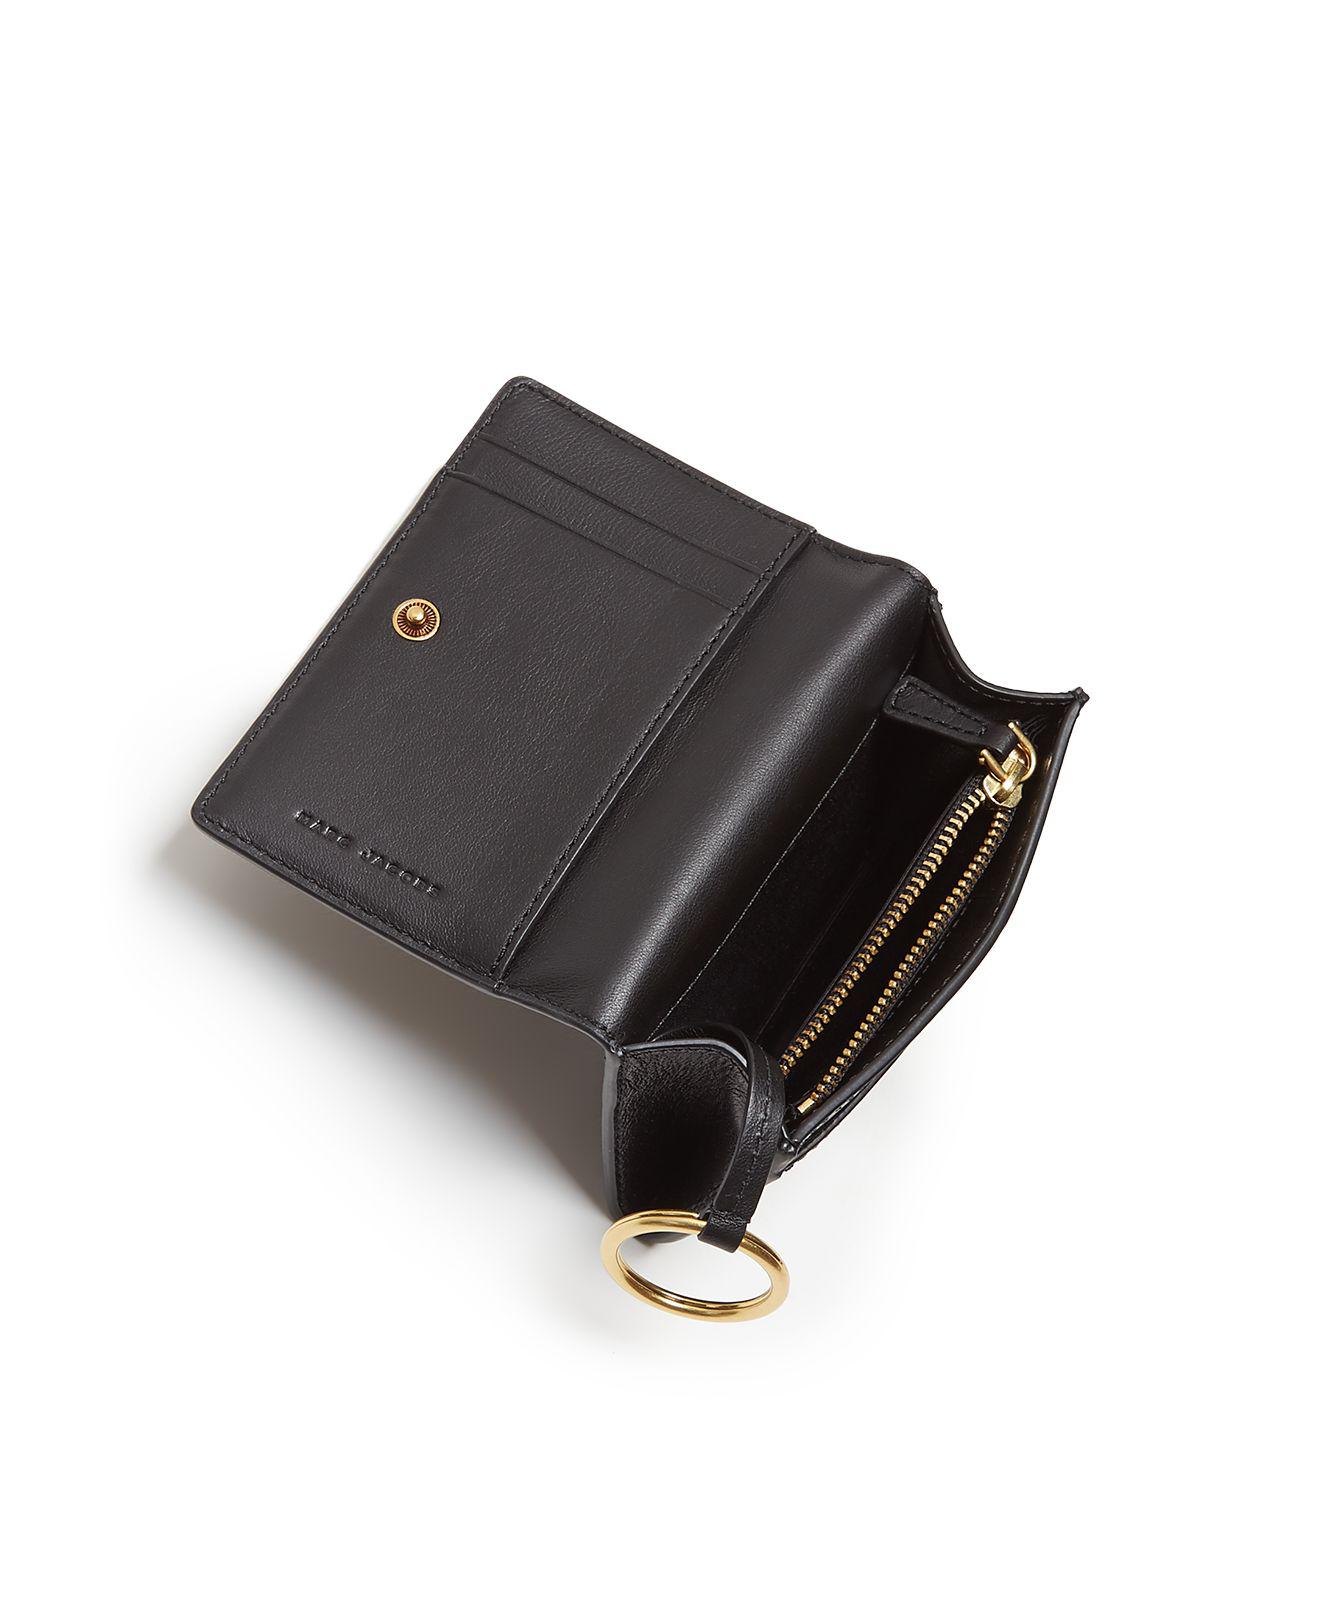 Marc Jacobs Double J Multi Leather Wallet in Black - Lyst